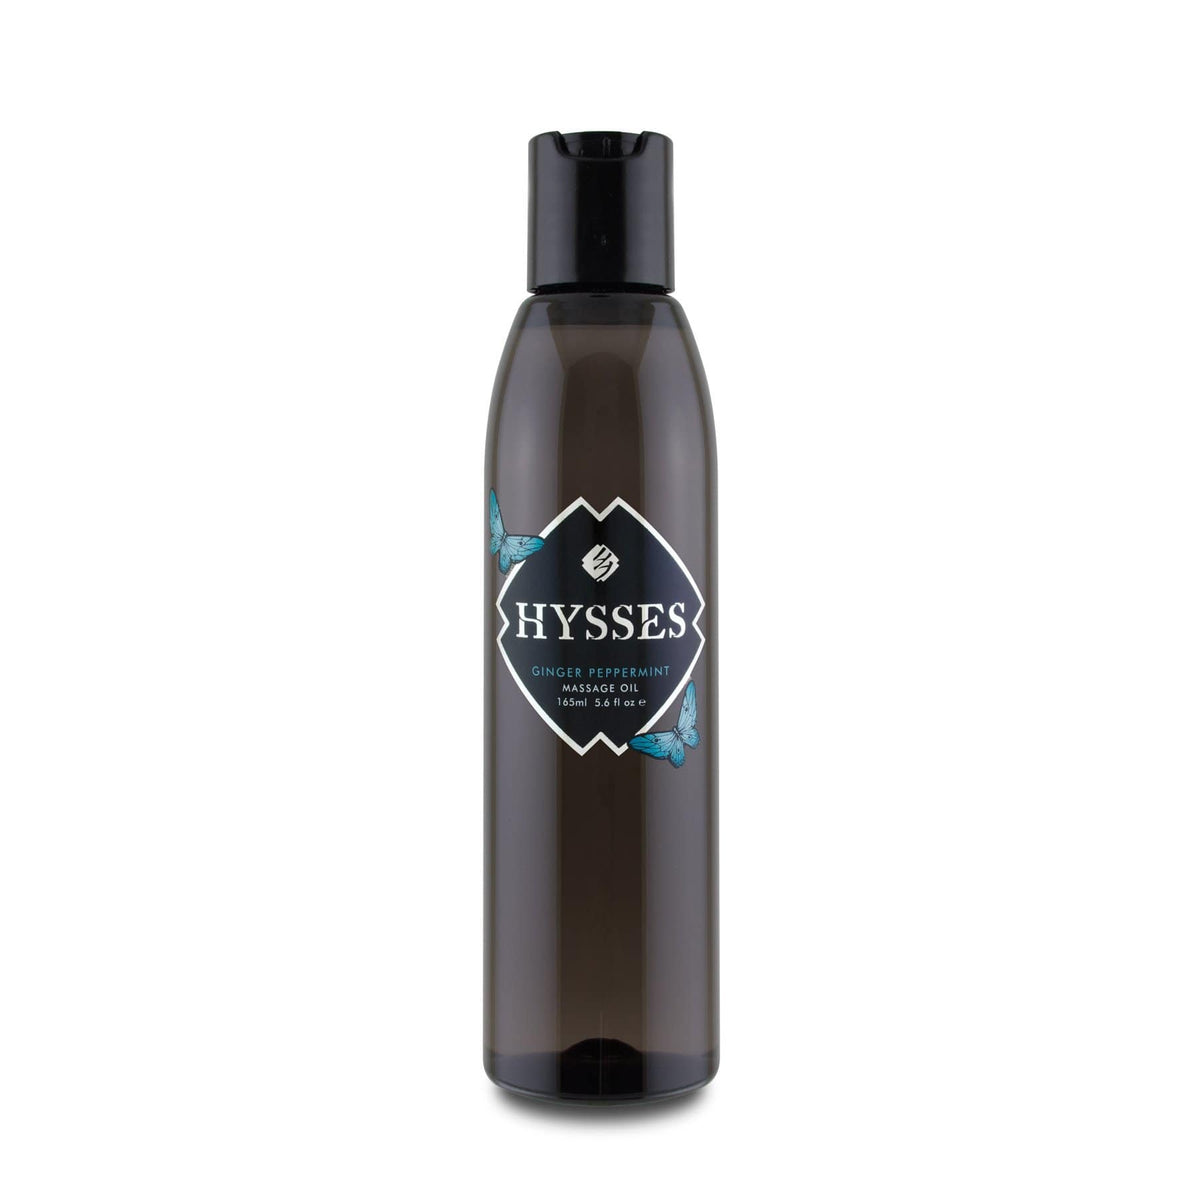 Hysses Body Care Massage Oil Ginger Peppermint